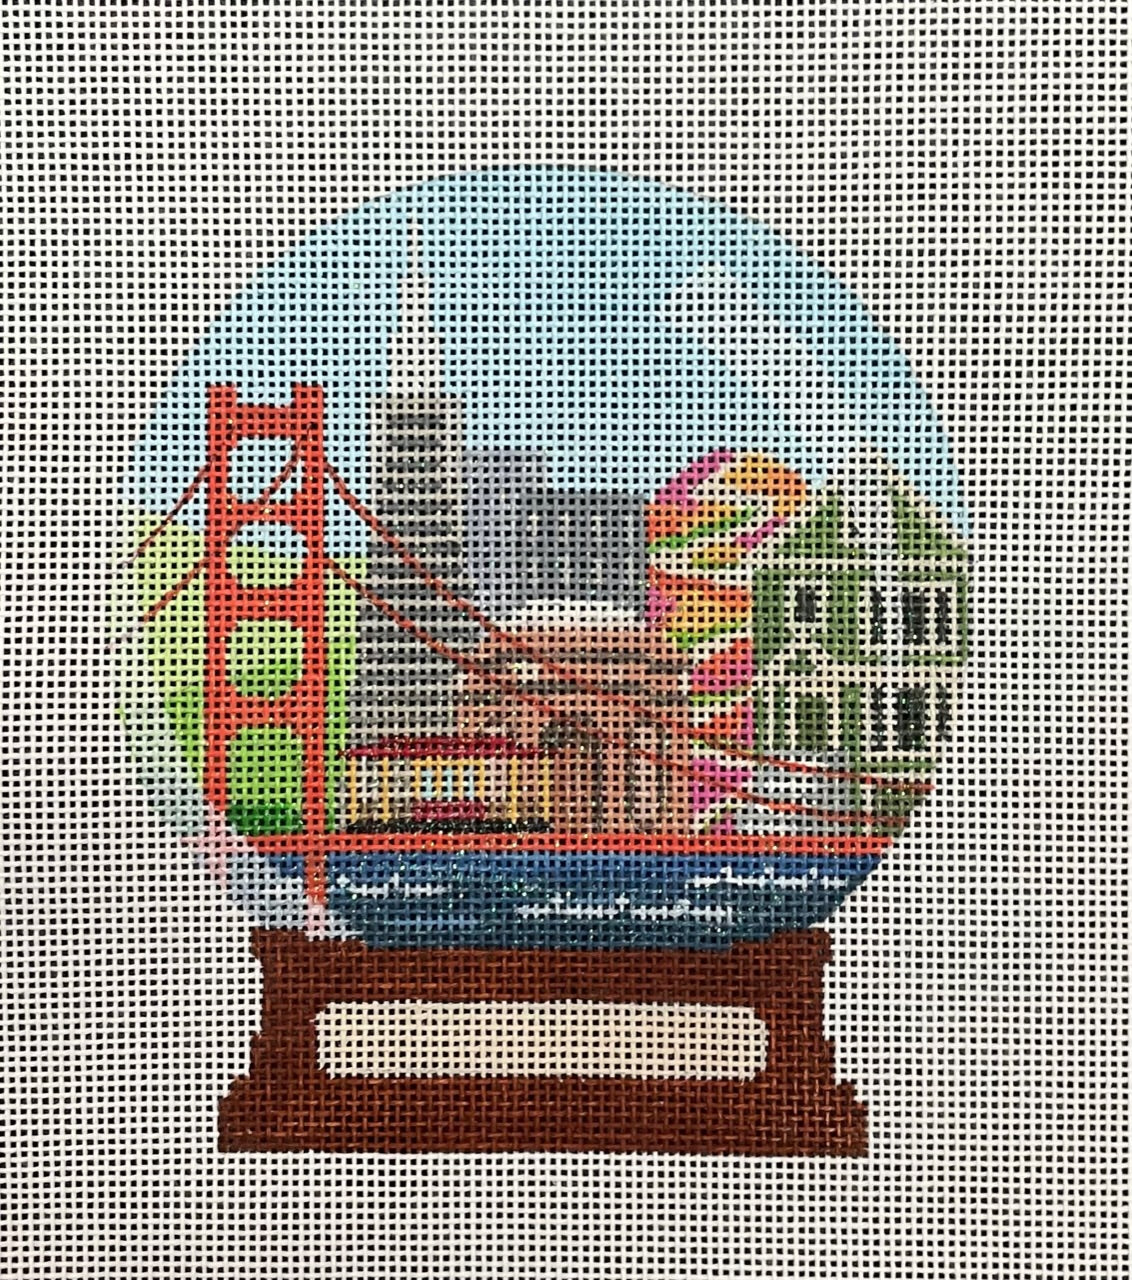 AL-077 - San Francisco Snow Globe